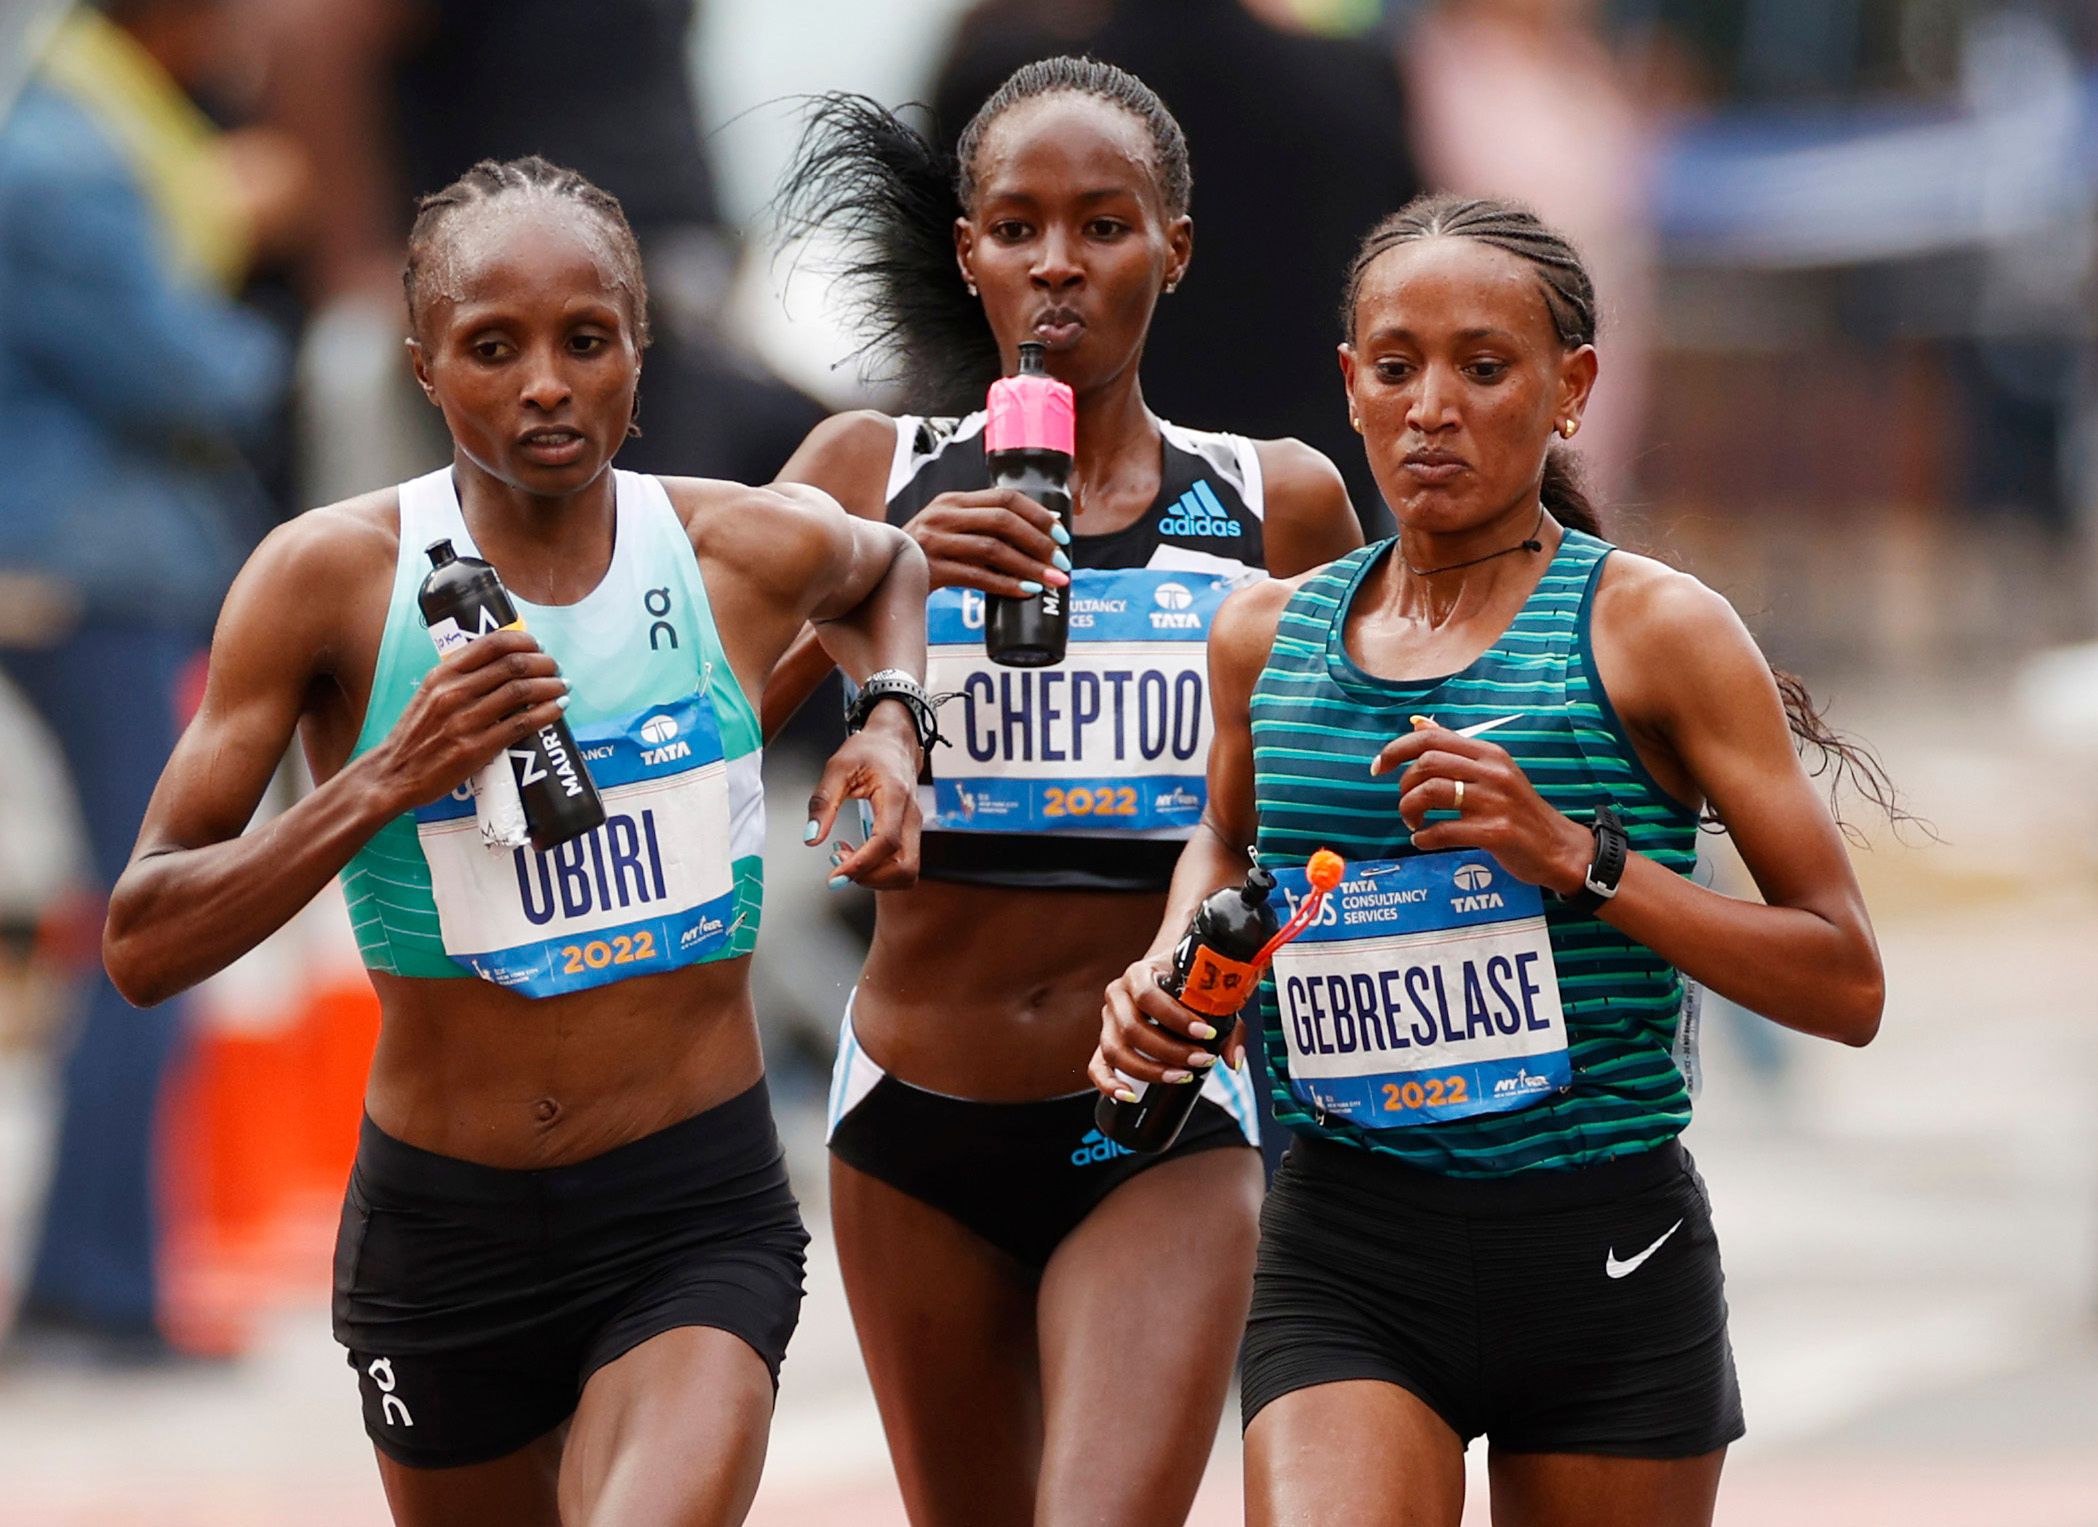 Hellen Obiri, Viola Cheptoo and Gotytom Gebreslase race in the New York City Marathon